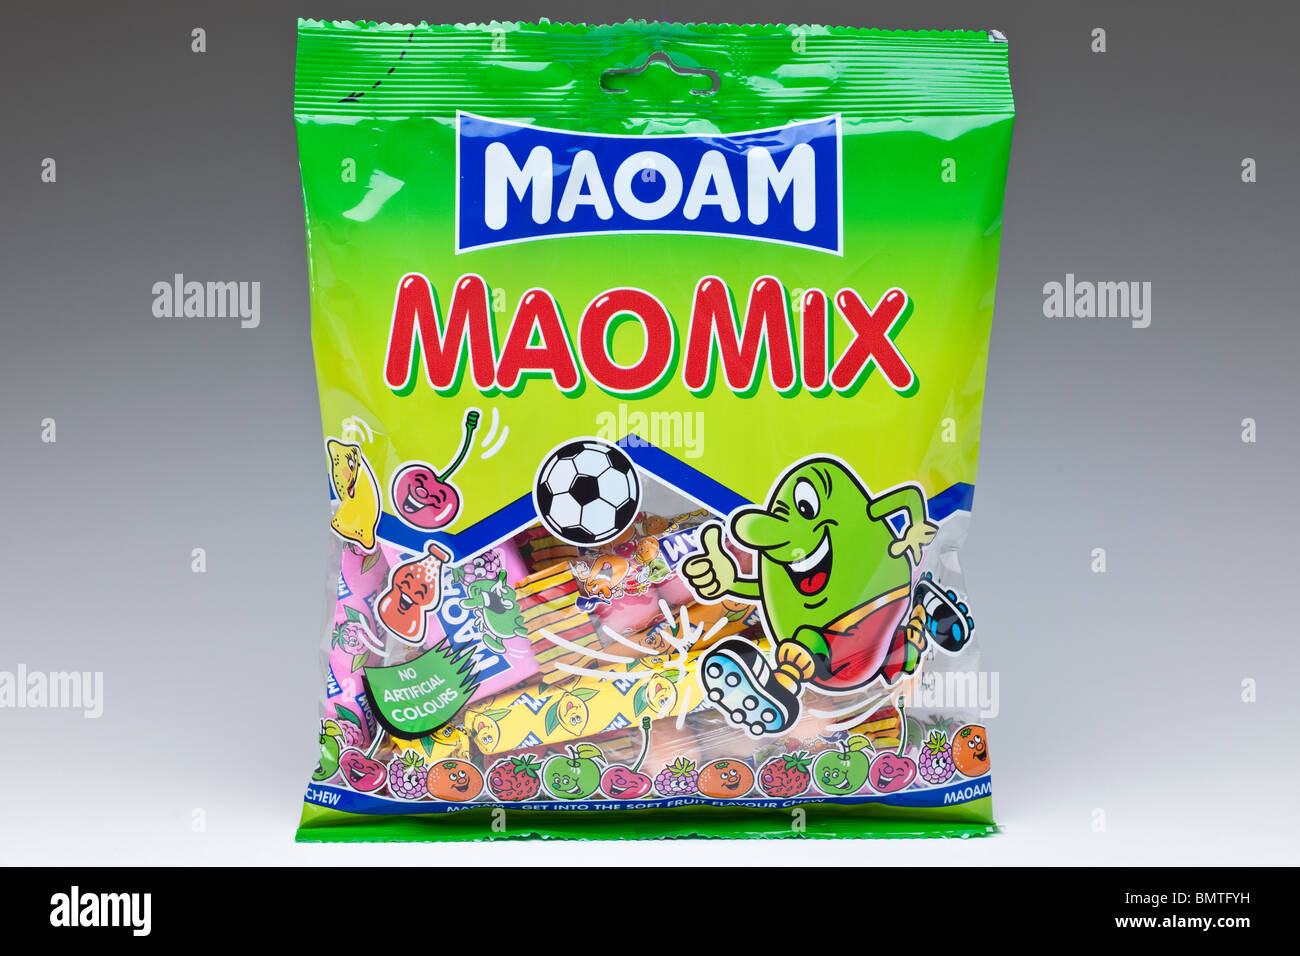 Maoam - Bonbon Mania